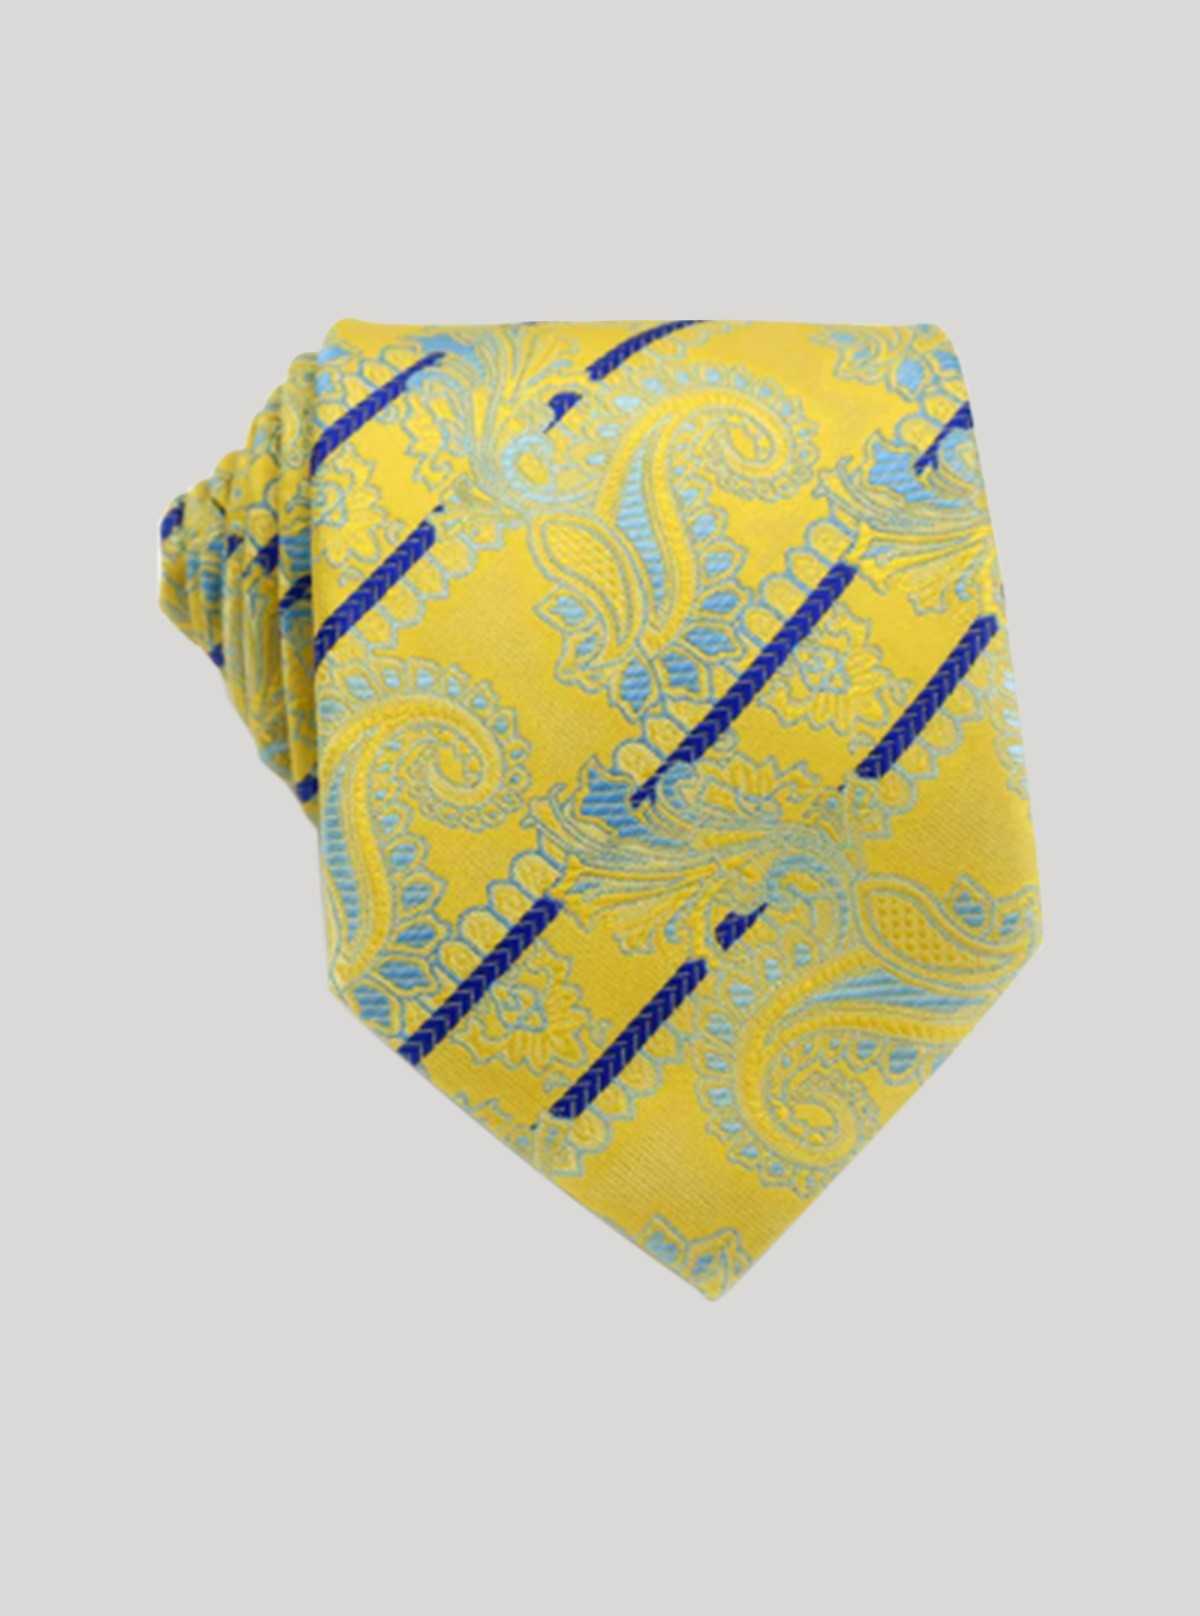 Yellow contrast Neck tie